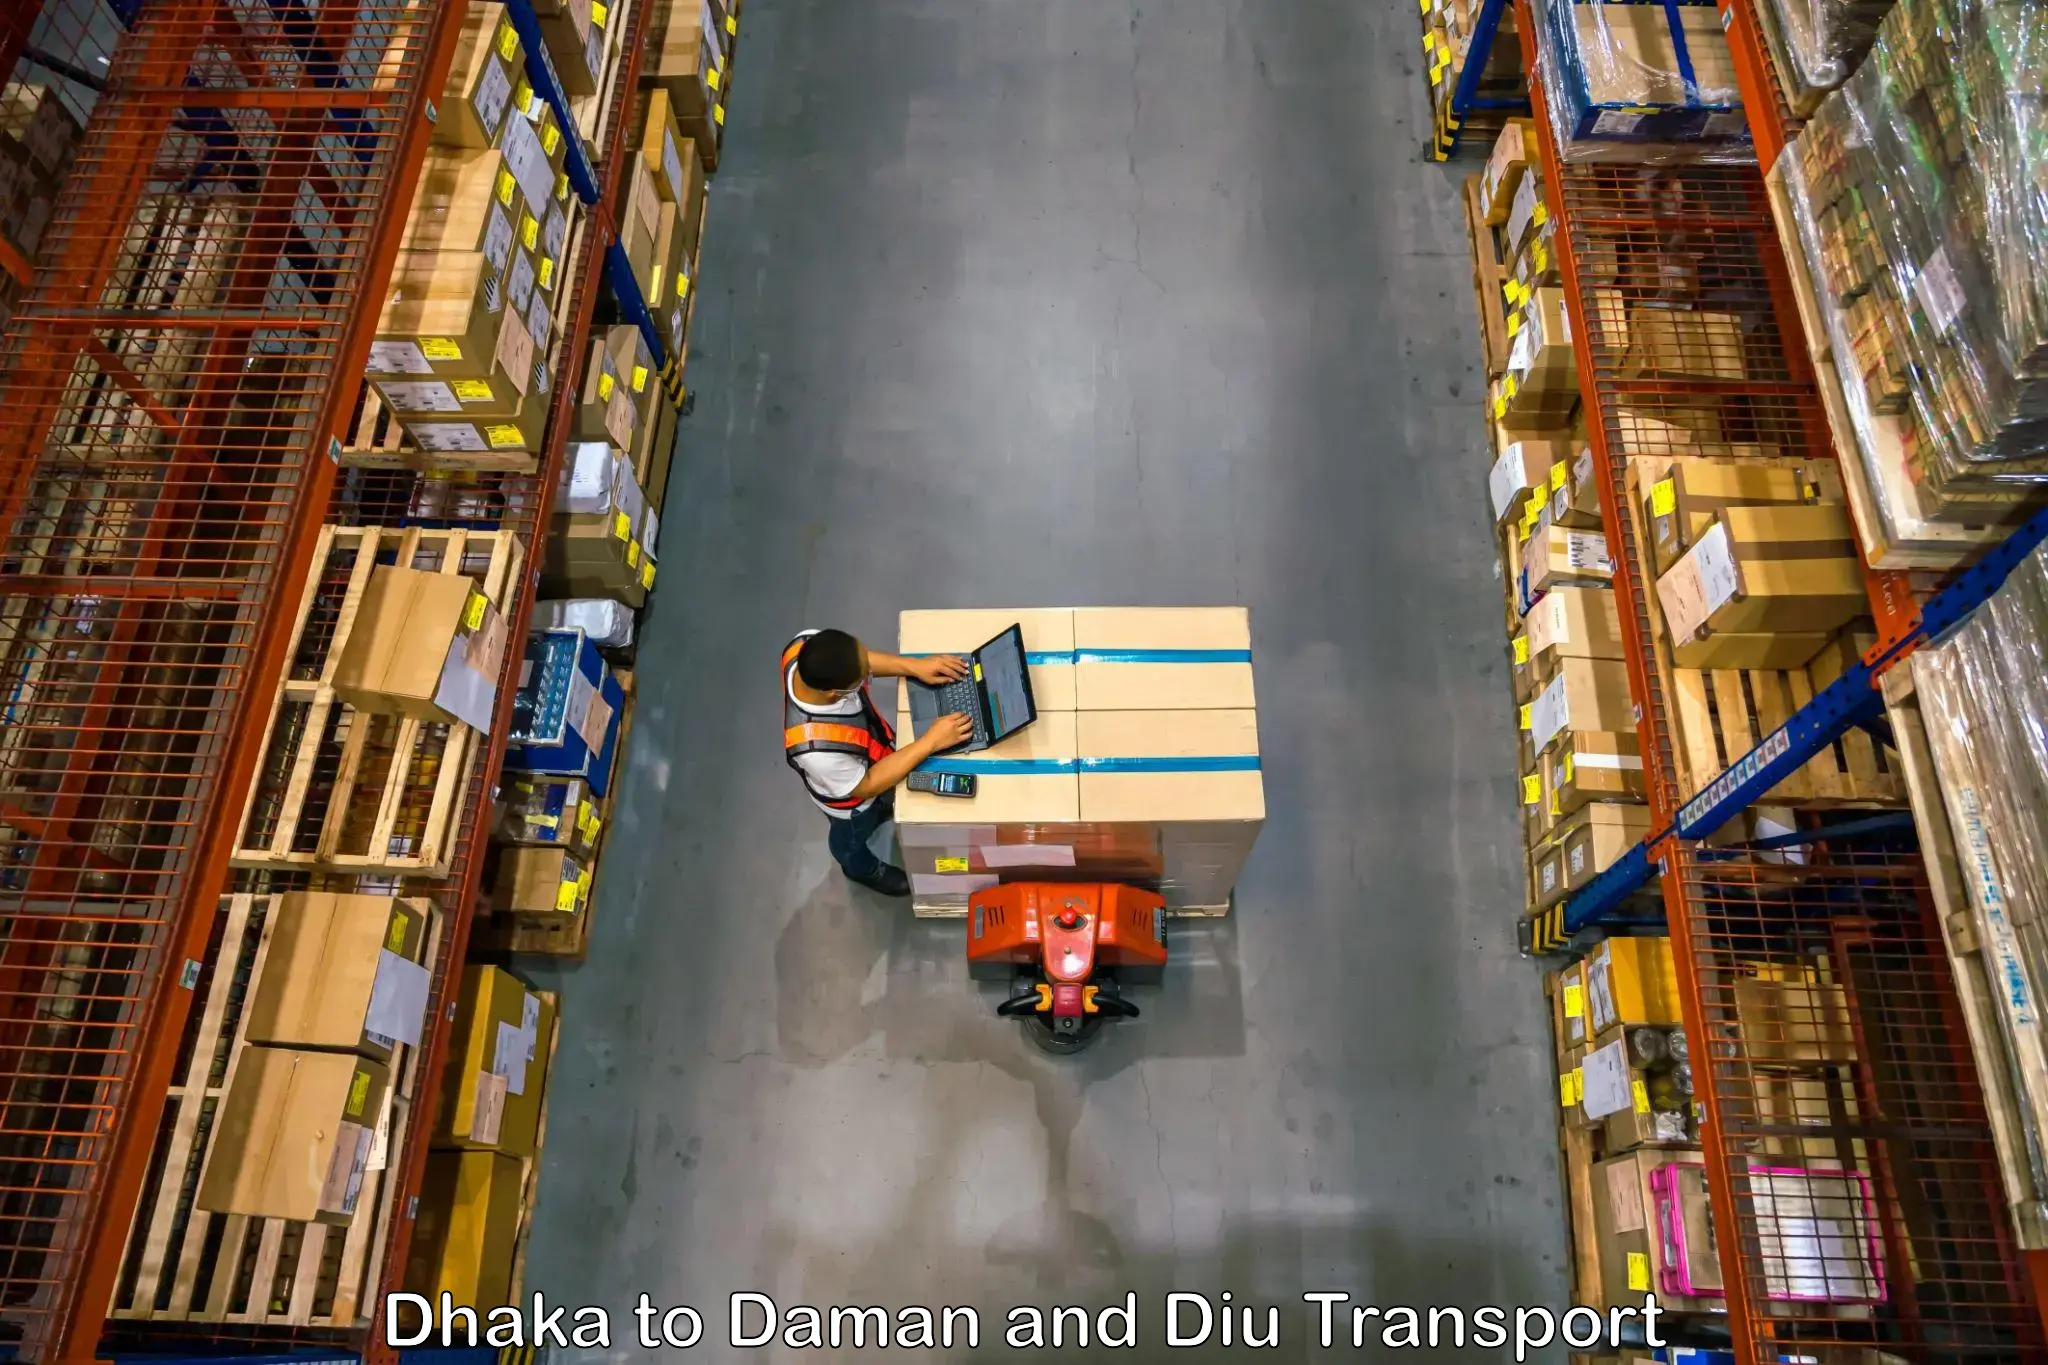 Transport services Dhaka to Daman and Diu